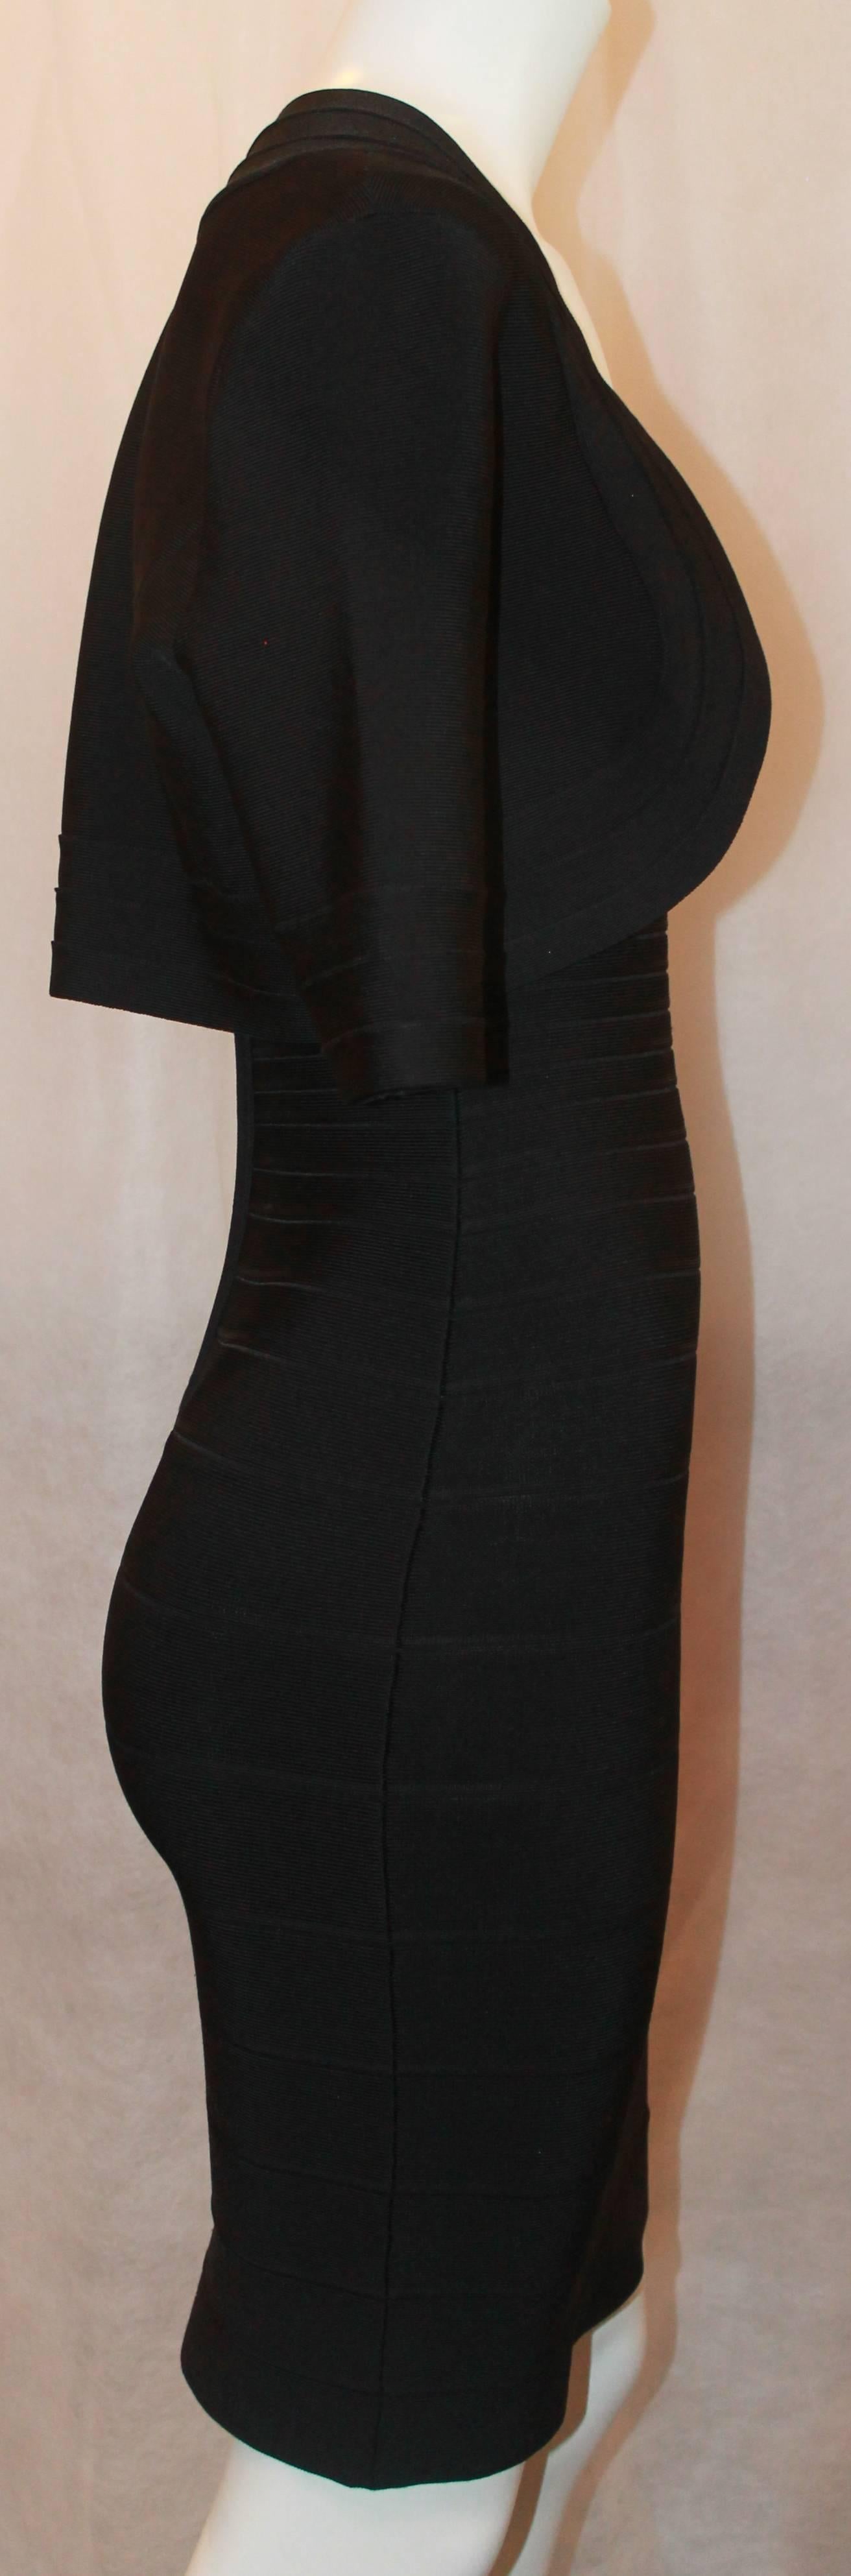 Women's Herve Leger Black Horizontal Striped Spaghetti Strap Bandage Dress w/ Bolero - S